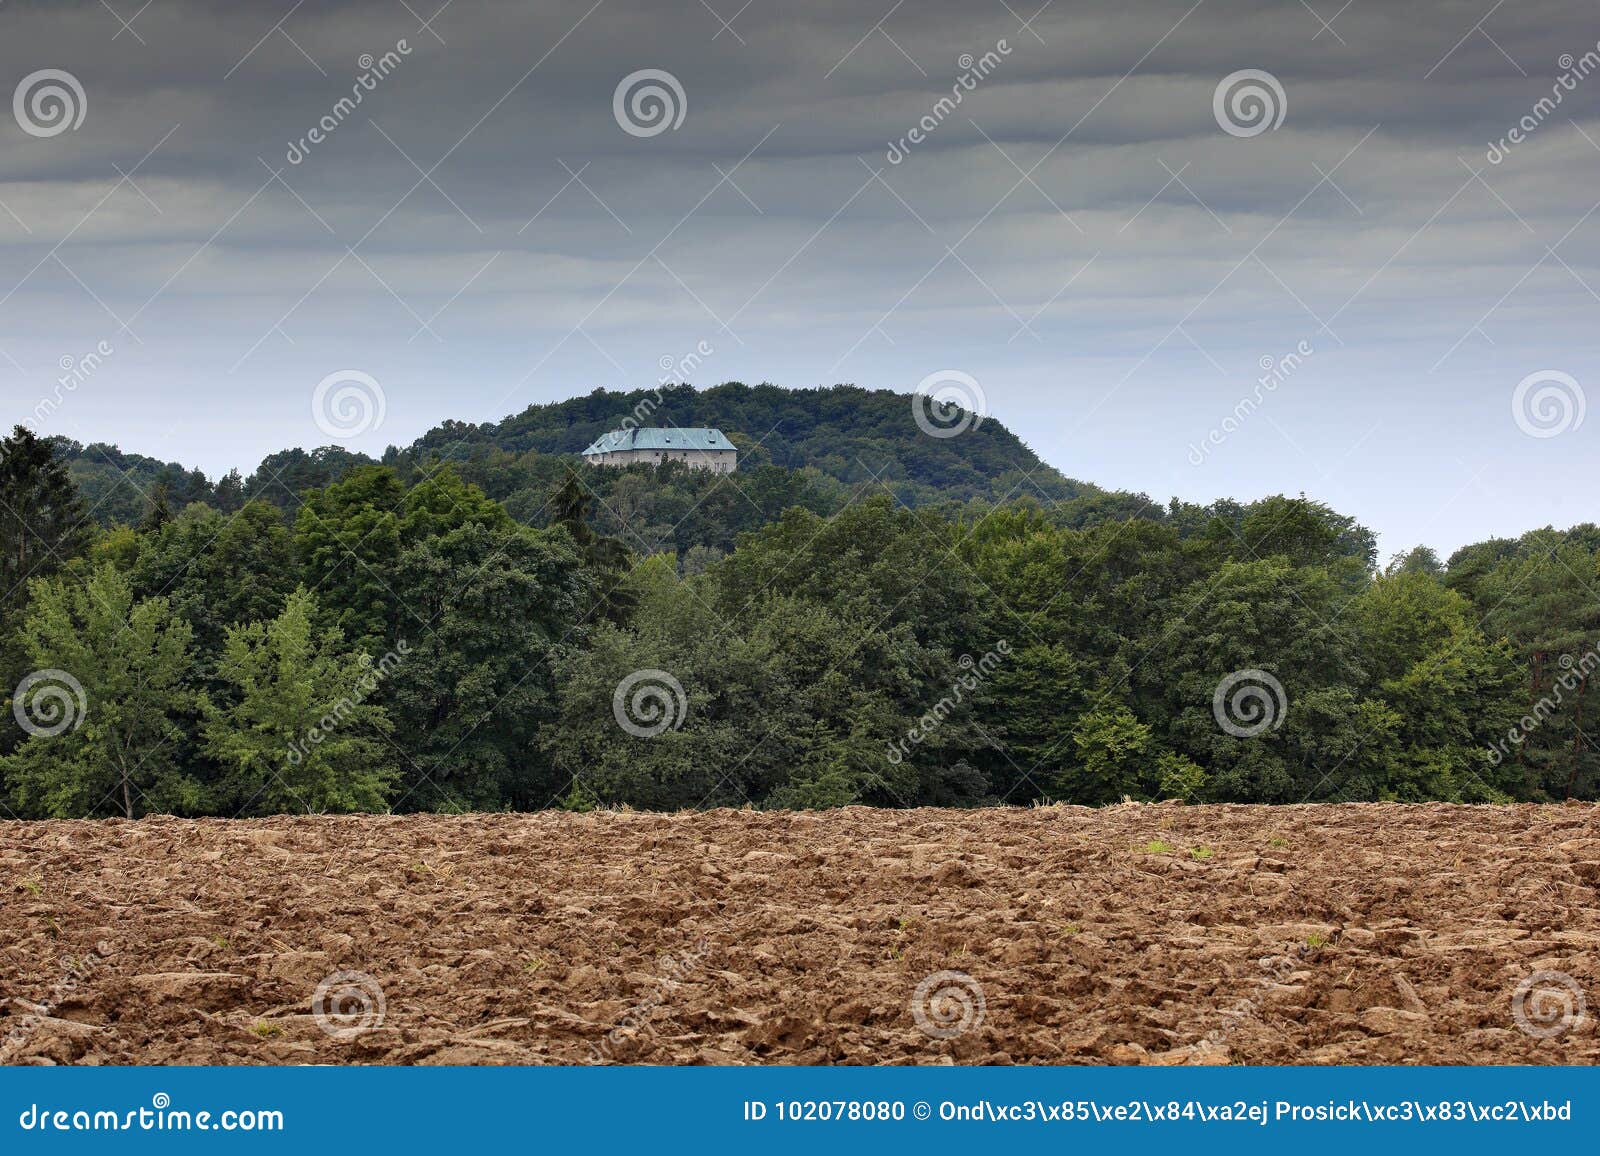 houska castle in czech republic, bohemia, europe. state caste, hiden in green forest, dark grey clouds. tower house in landscape.